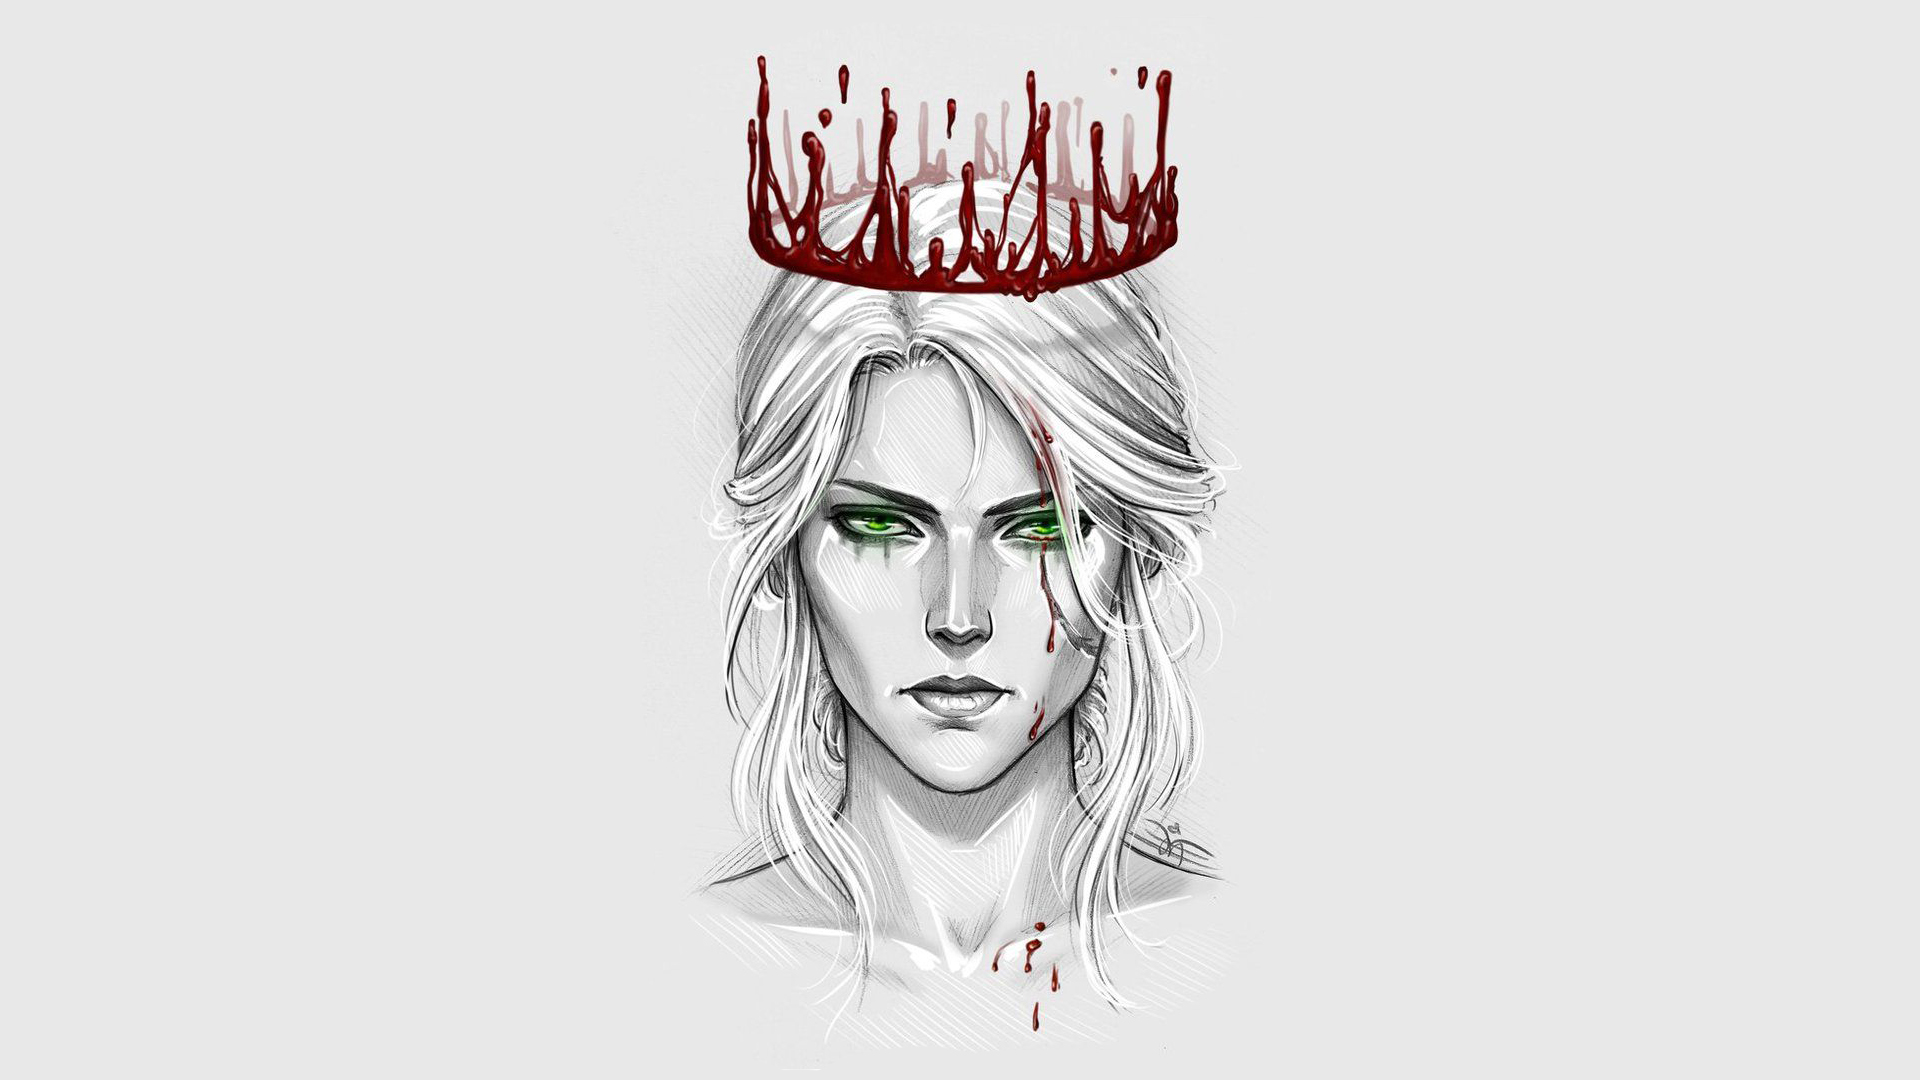 General 1920x1080 The Witcher 3: Wild Hunt blood fan art green eyes crown Cirilla Fiona Elen Riannon